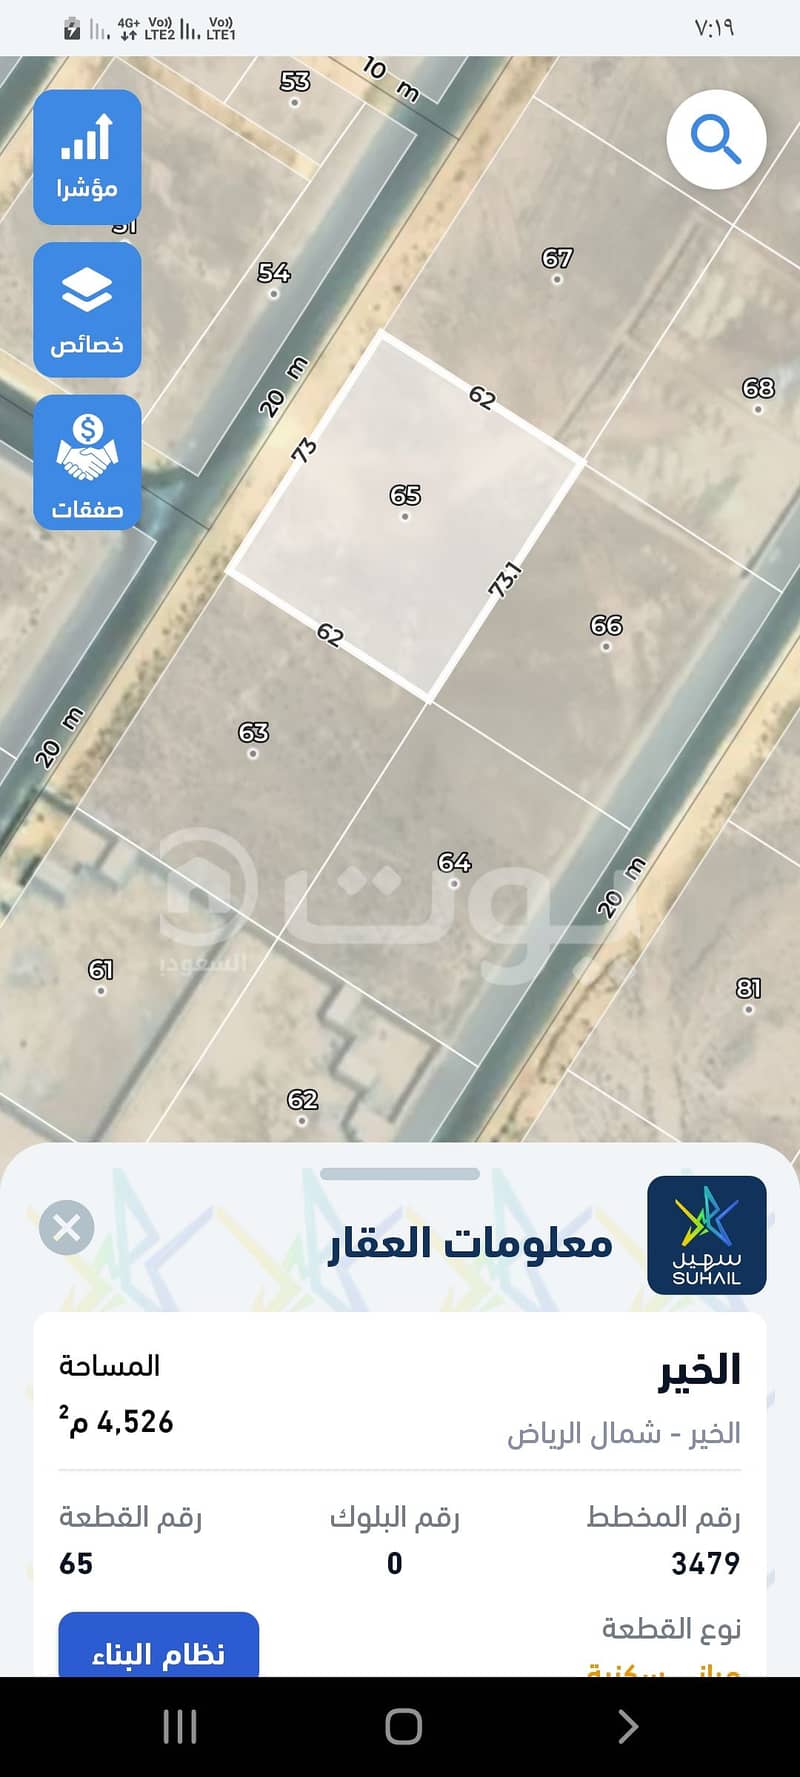 Residential land in Al Khair scheme 79